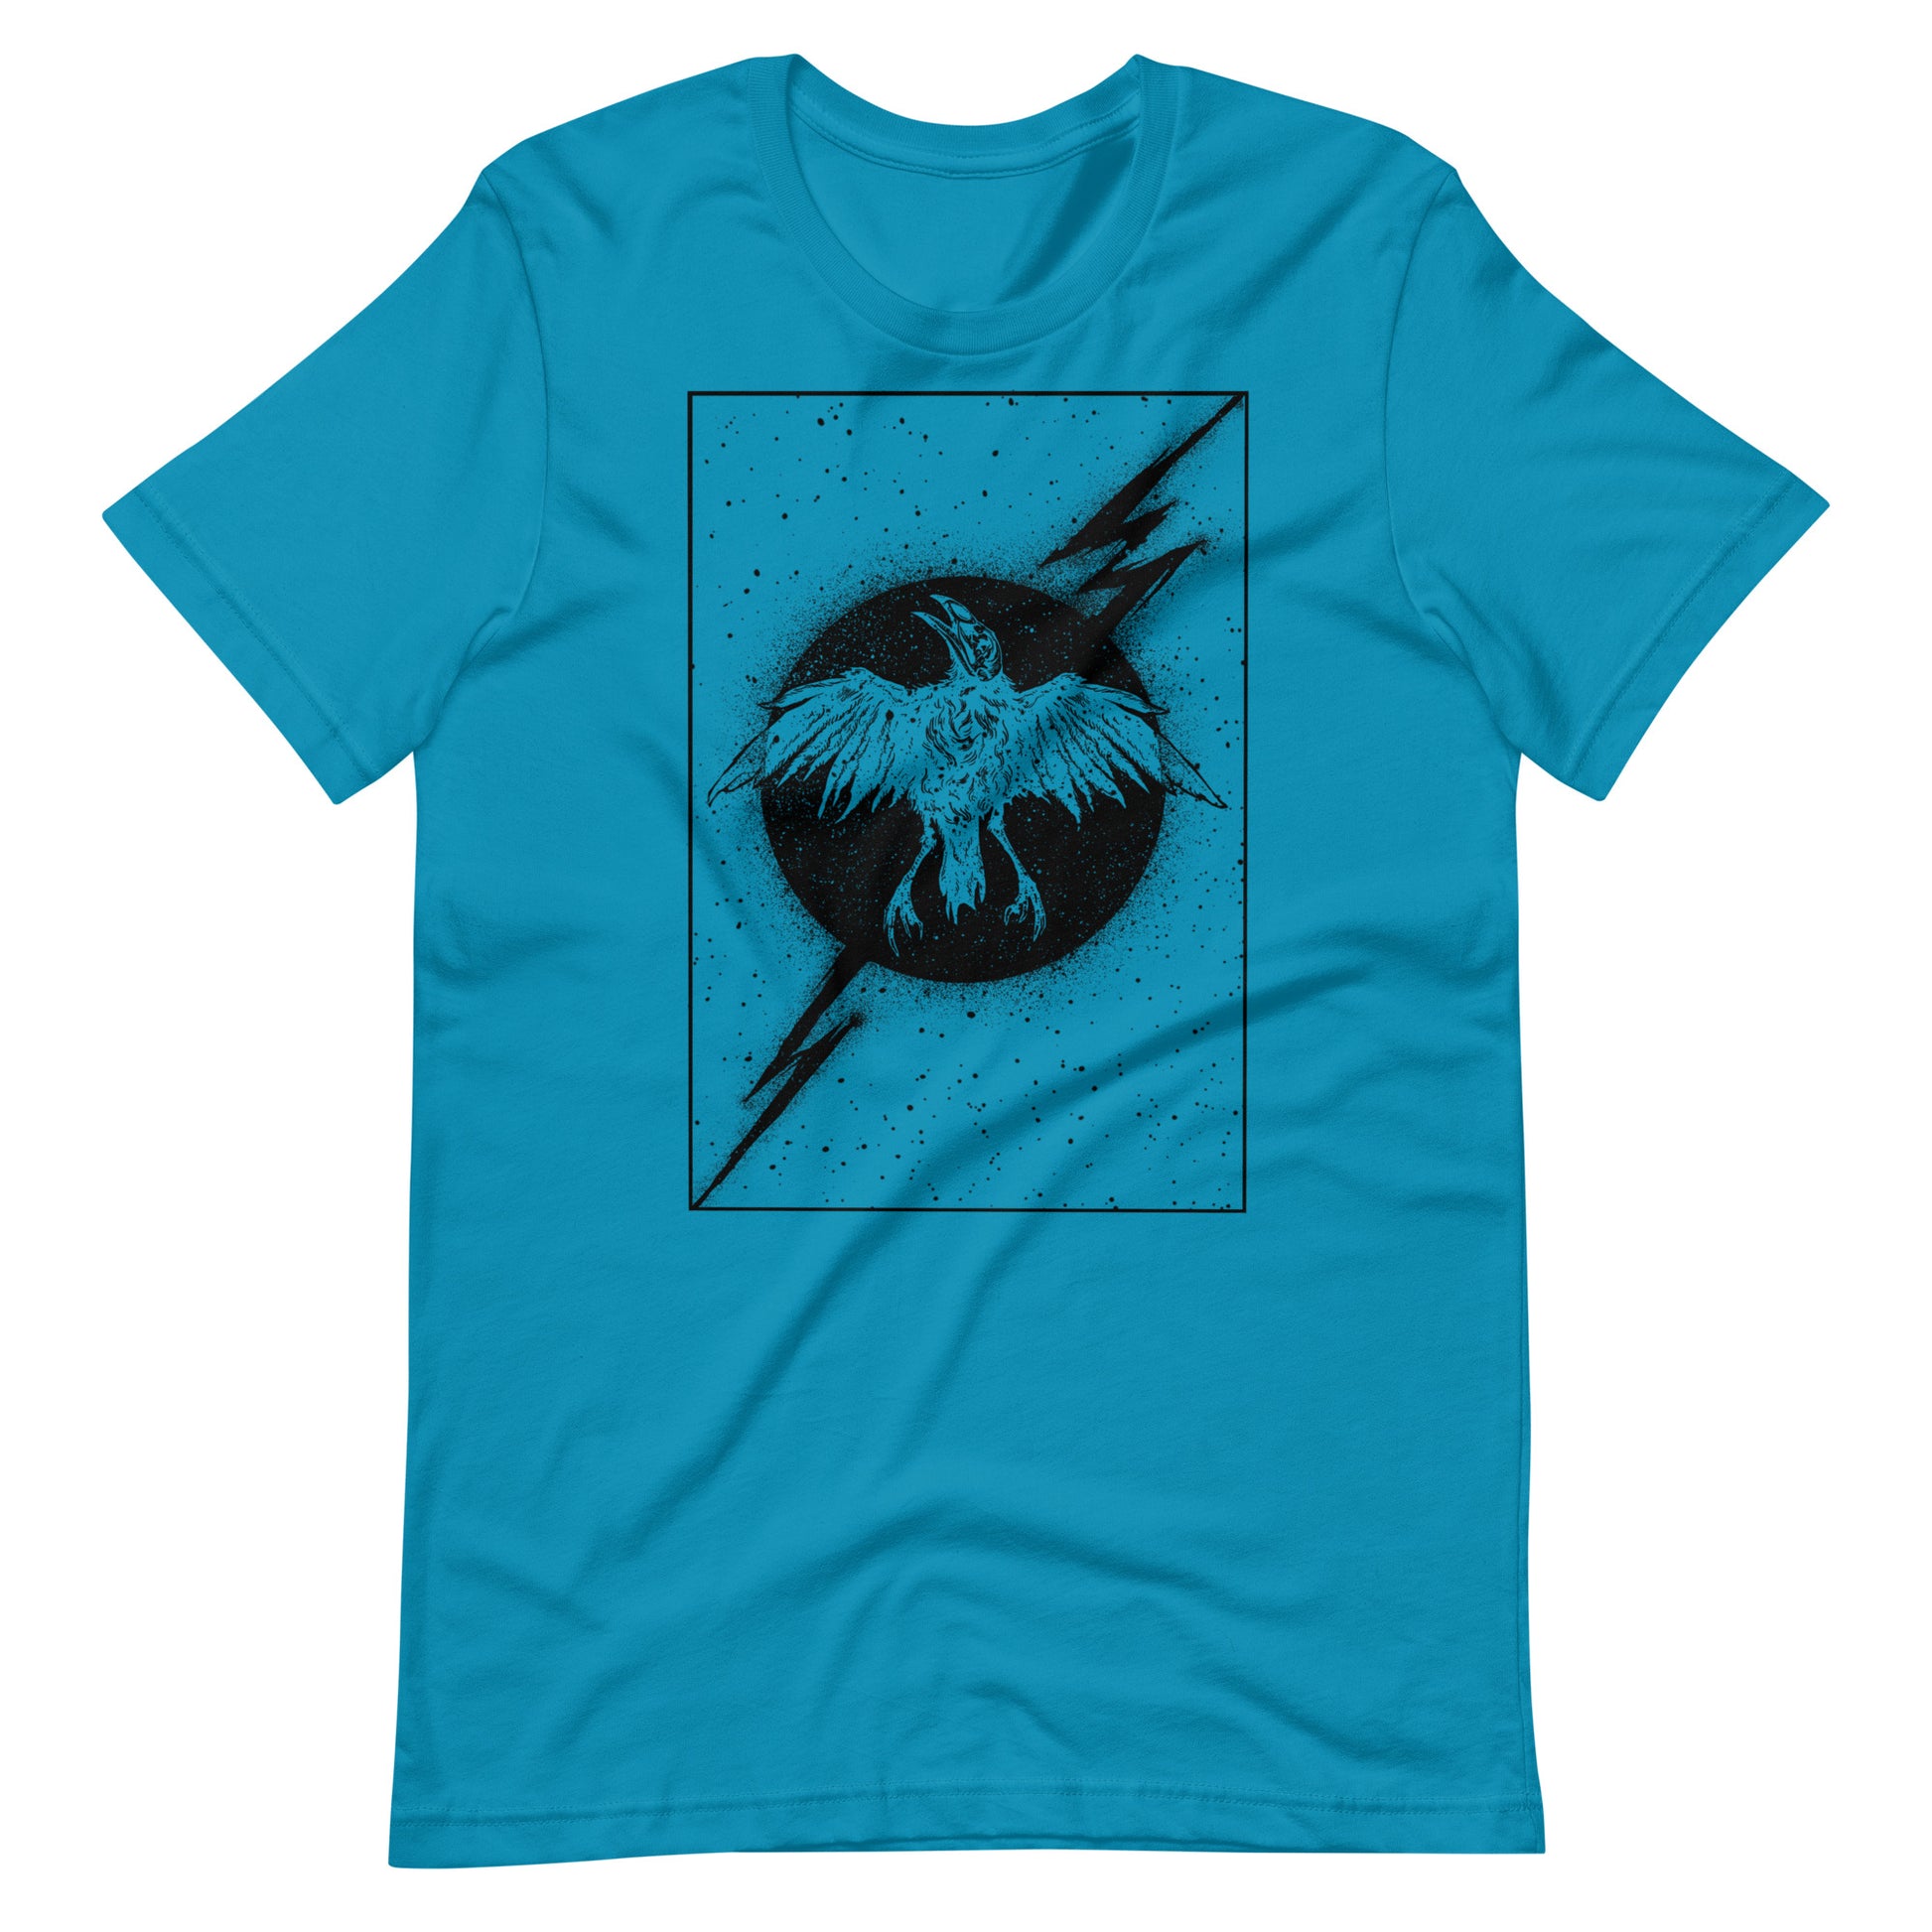 Night Thunder Black - Men's t-shirt - Aqua Front